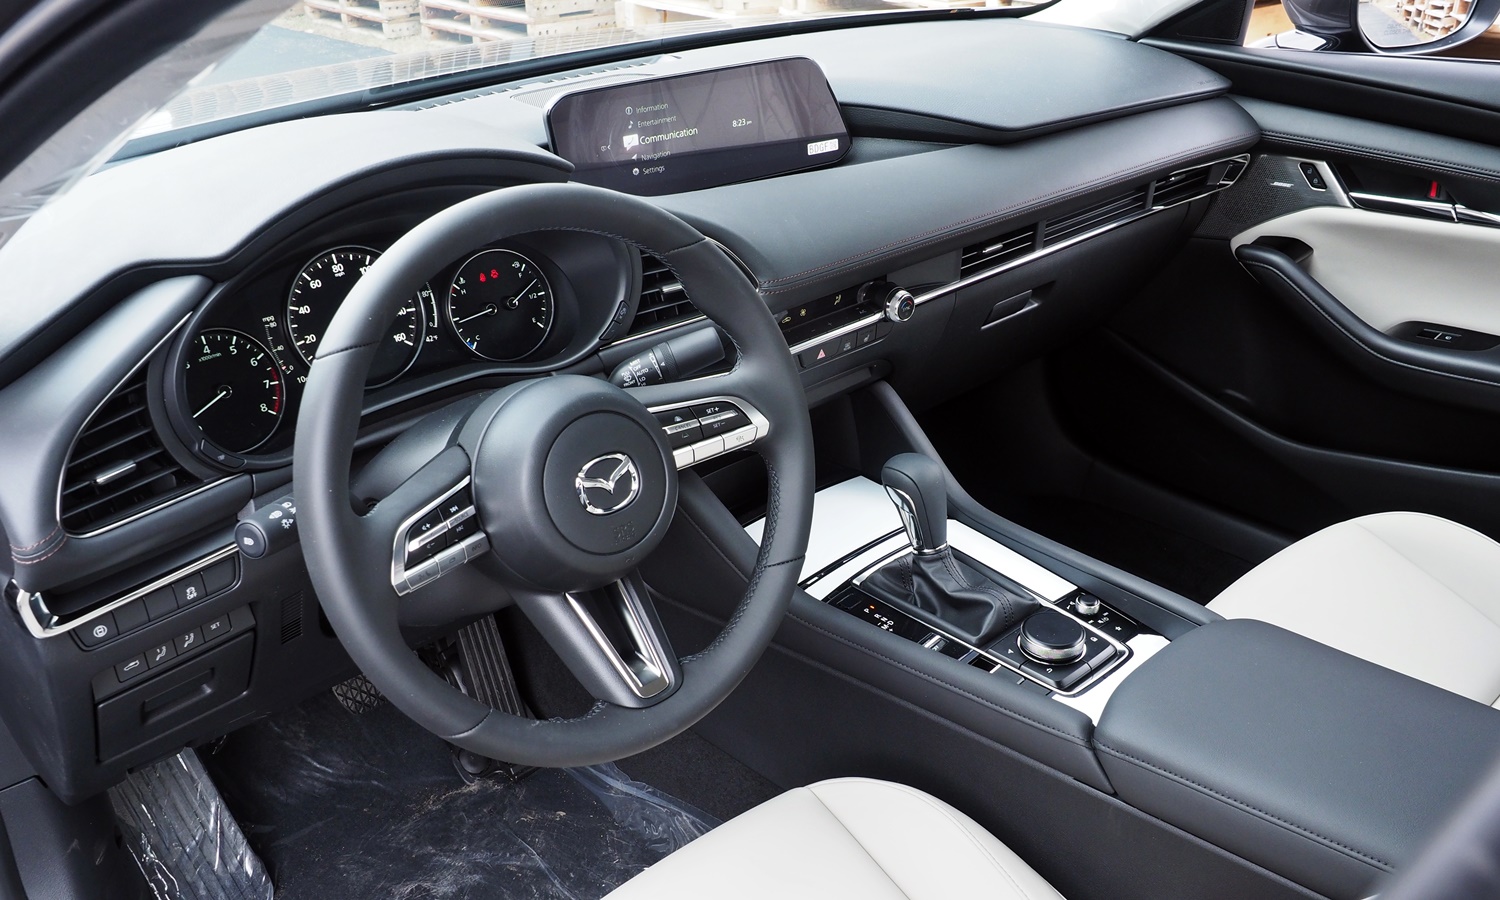 Toyota Corolla Hatchback Photos: Mazda3 interior